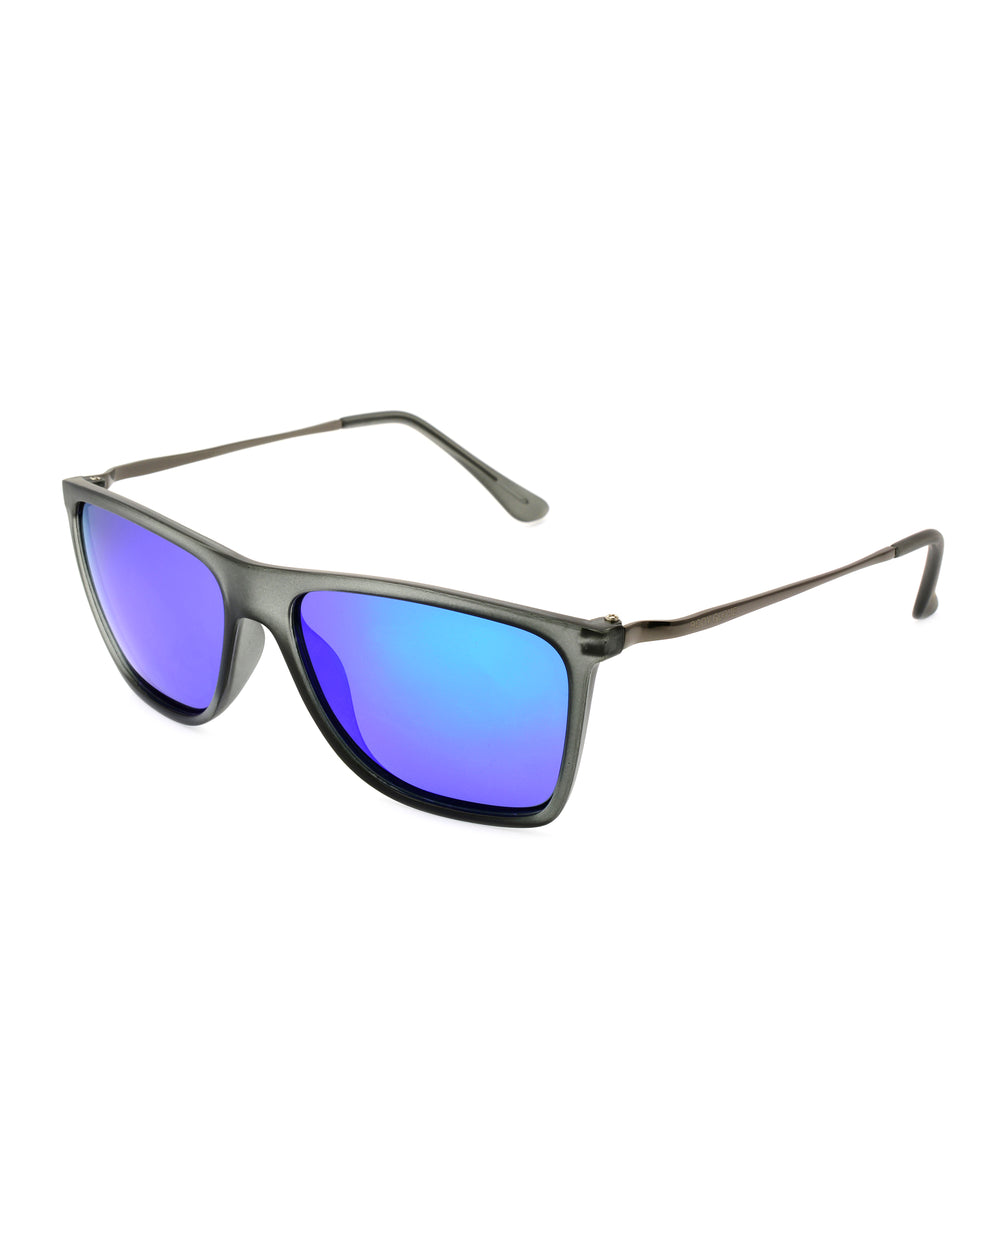 Body Glove Vapor 23 Polarized Wrap Sunglasses, Shiny Black, 60 mm :  : Clothing, Shoes & Accessories